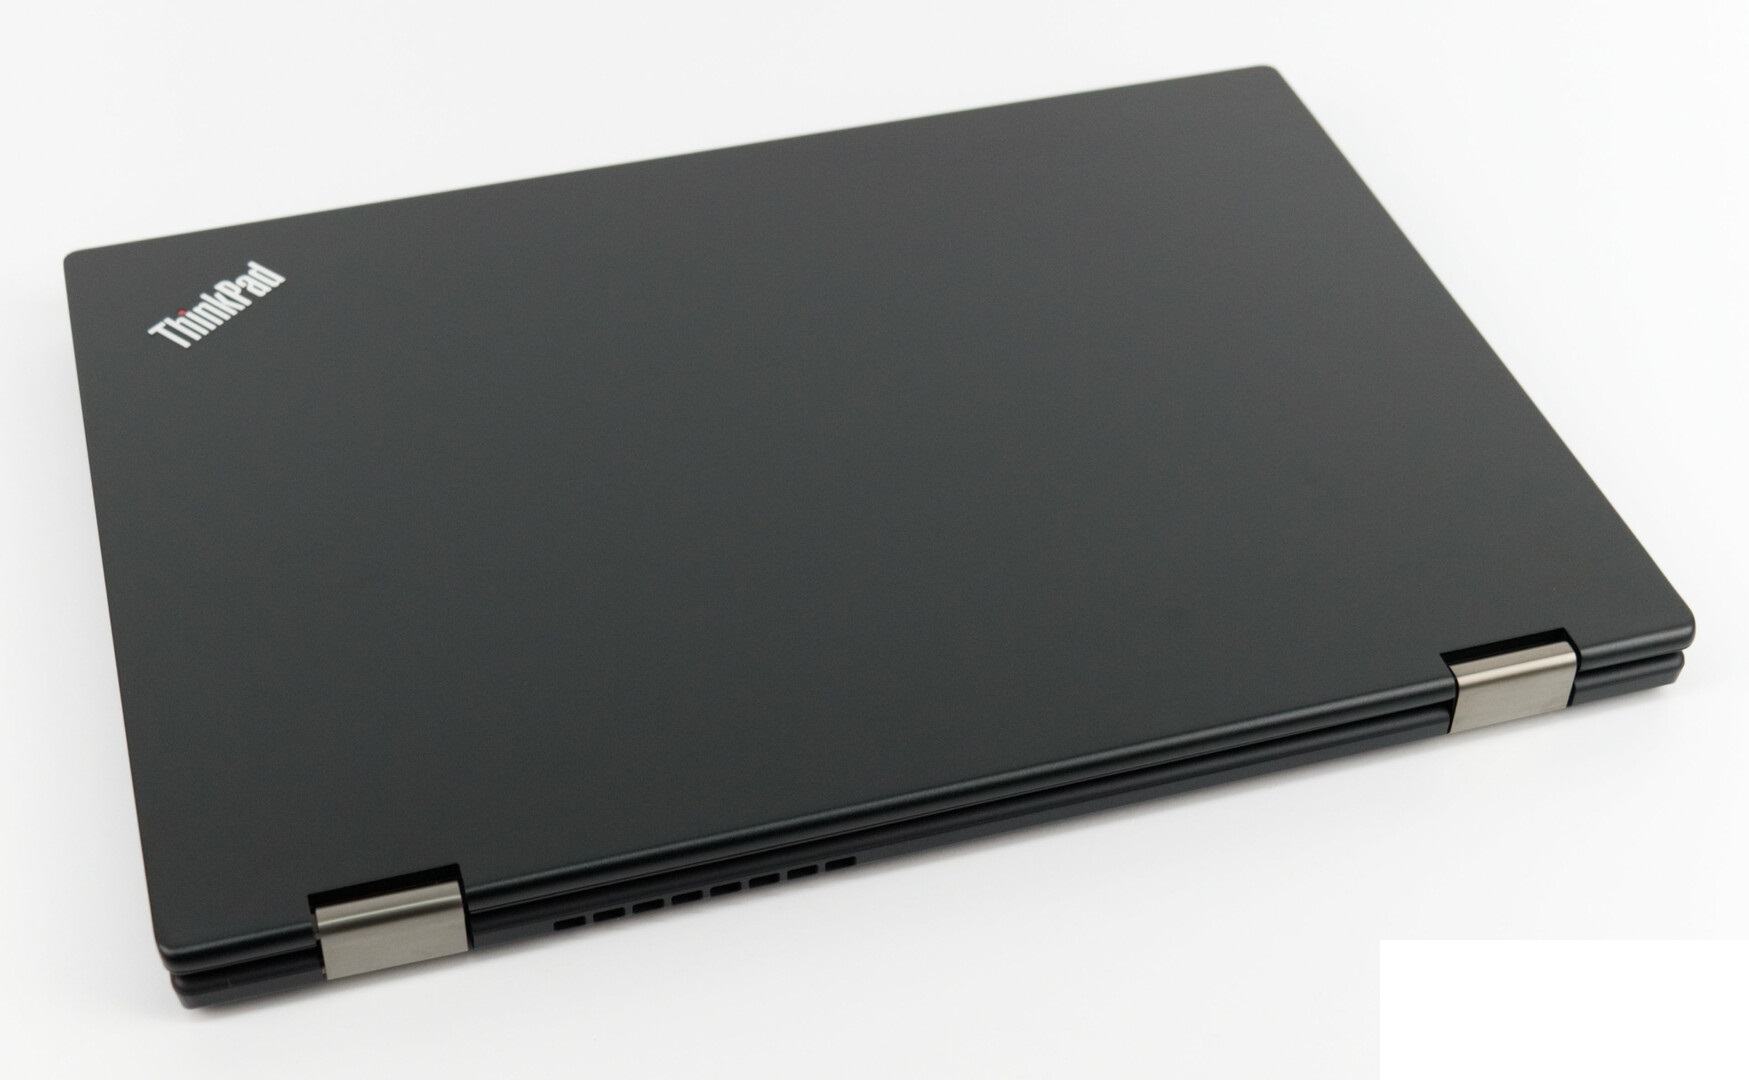 ThinkPad L390 Yoga